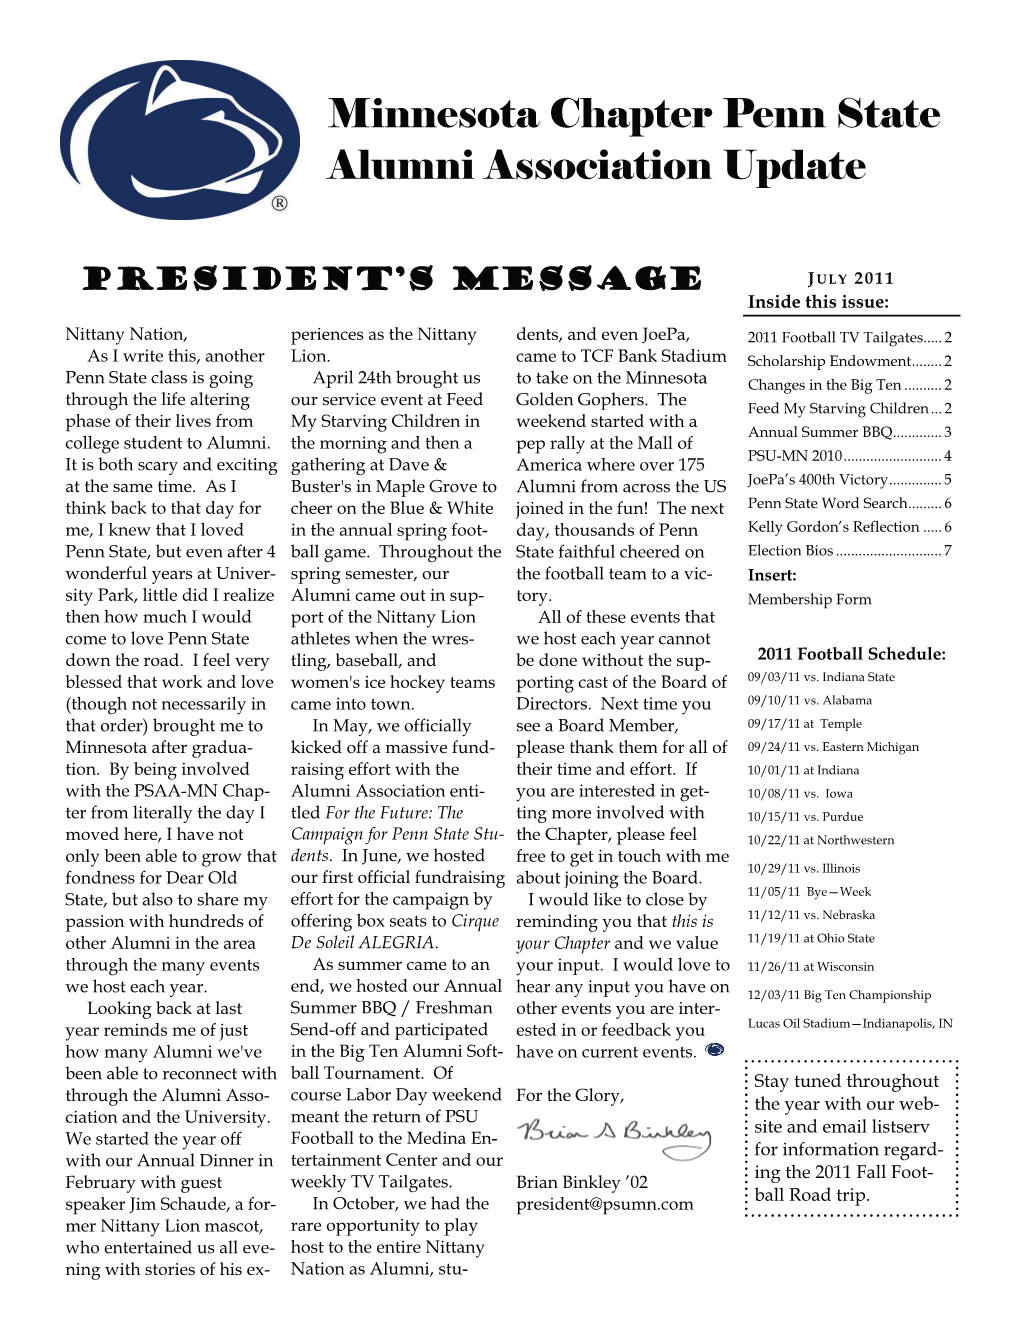 Minnesota Chapter Penn State Alumni Association Update